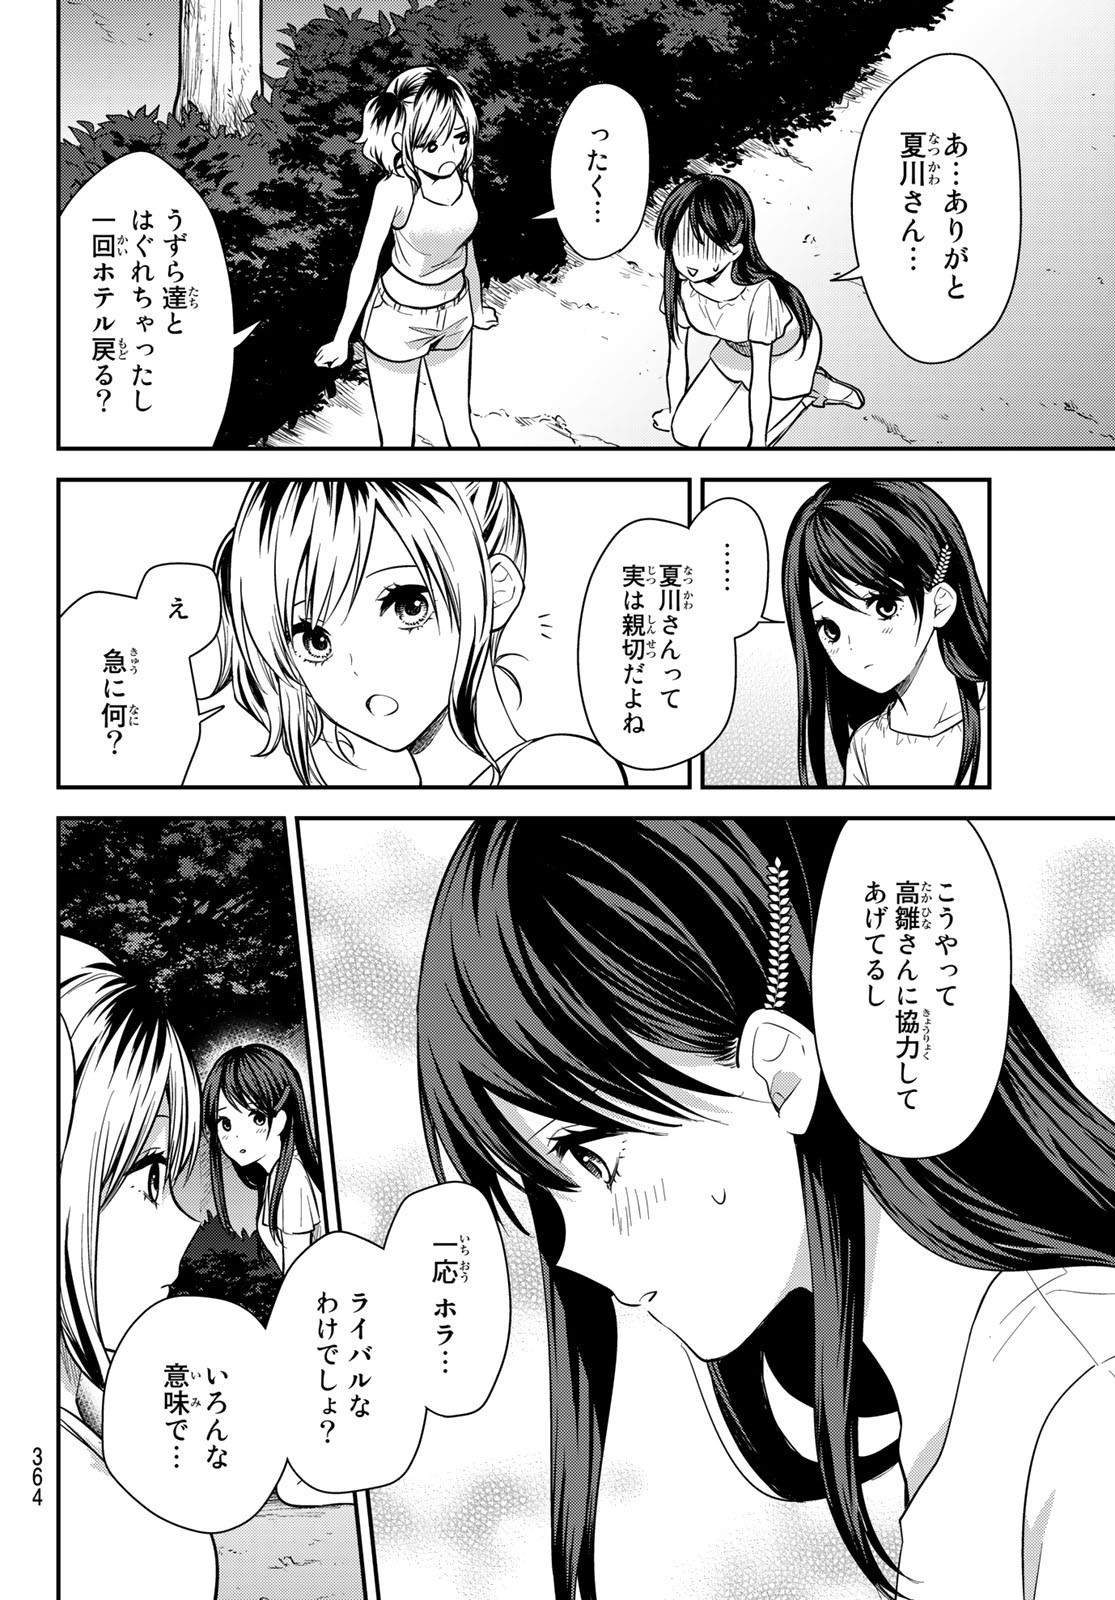 Kimi ga Megami Nara Ii no ni (I Wish You Were My Muse) - Chapter 021 - Page 18